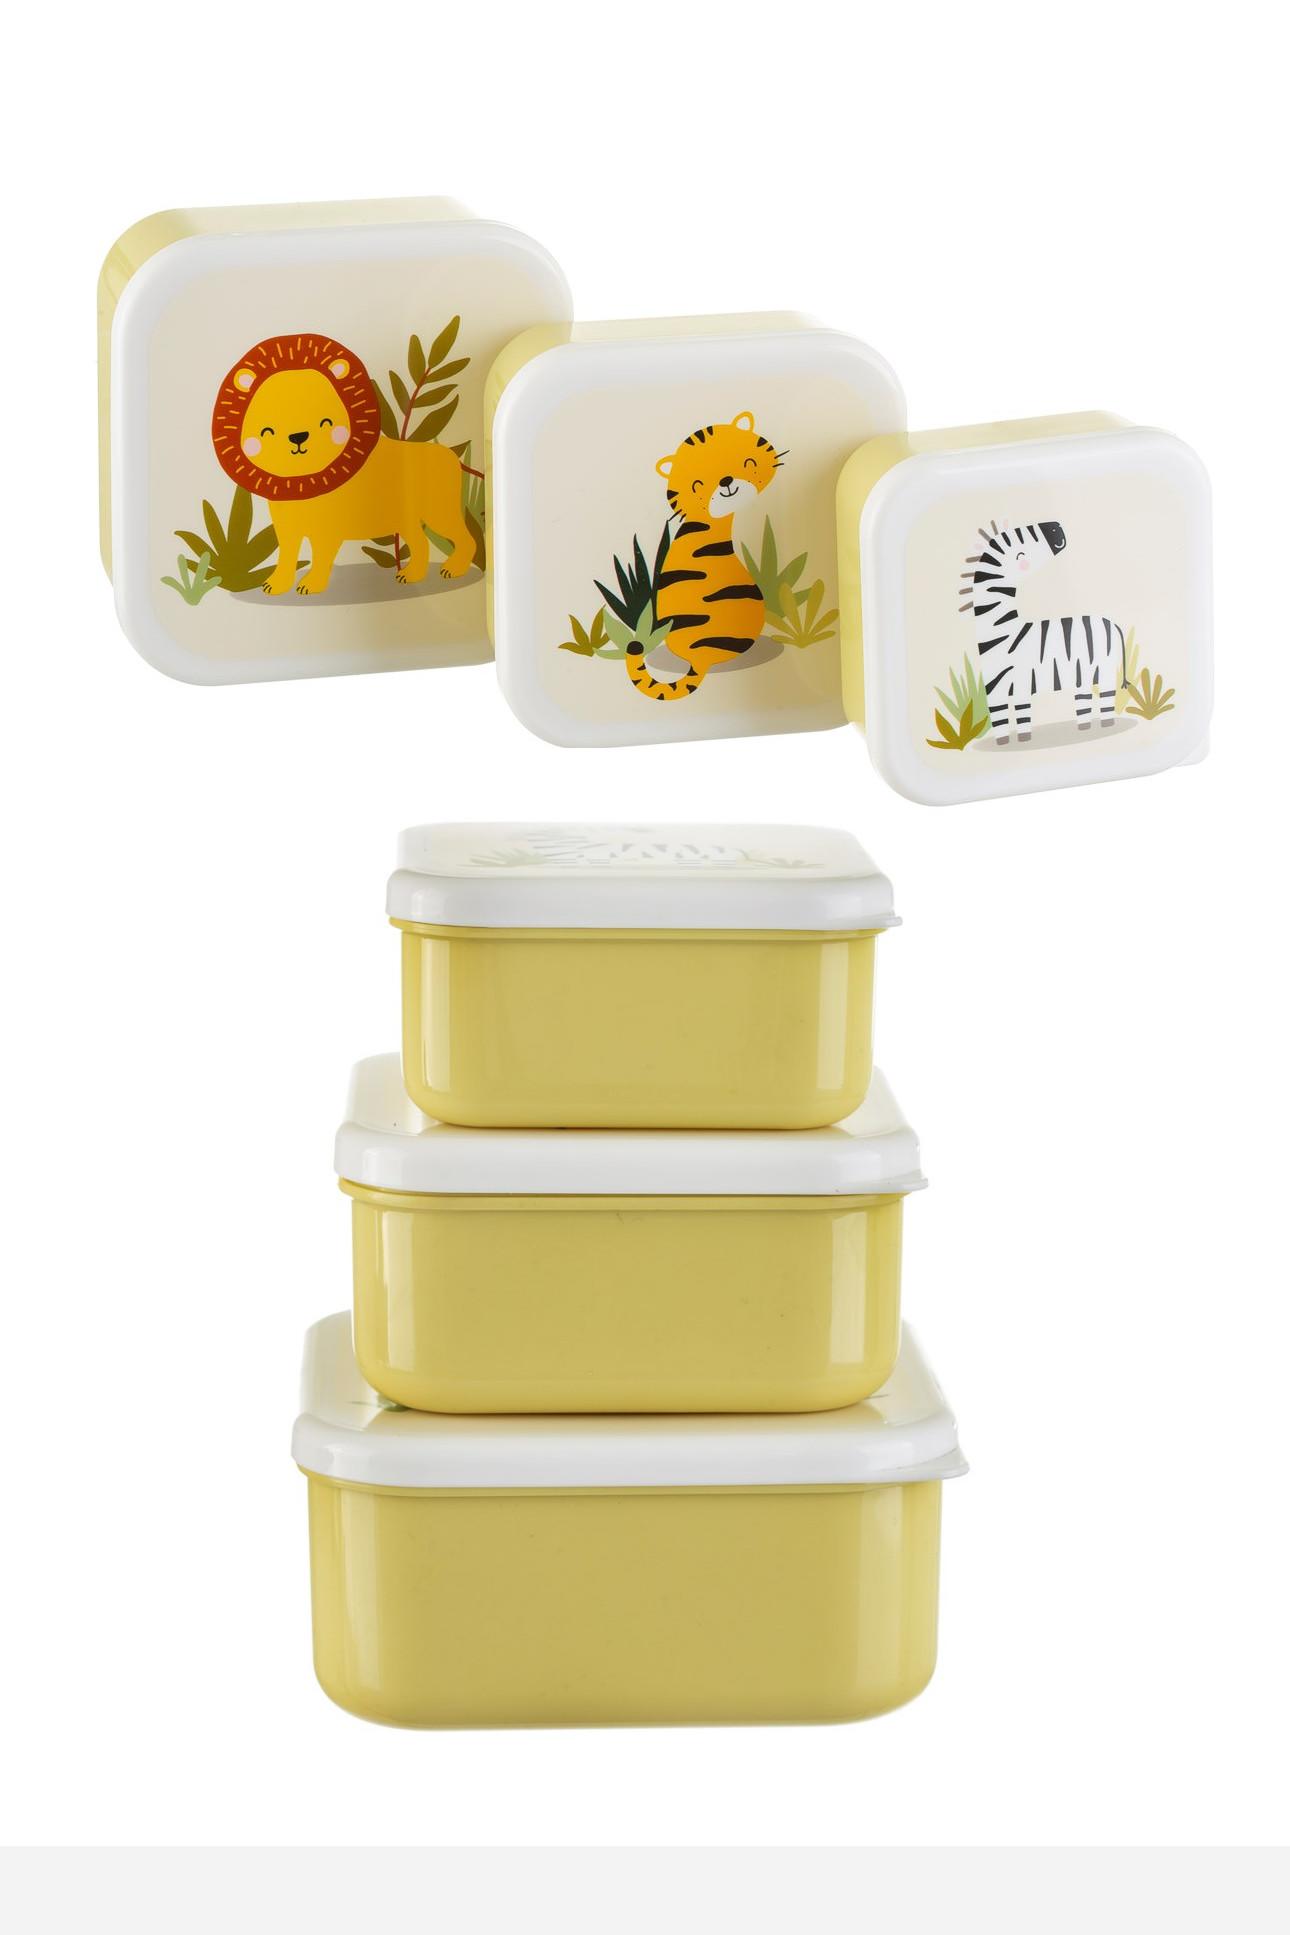 New Wipe Clean Savannah Safari Lunch Boxes - Set of 3 #2